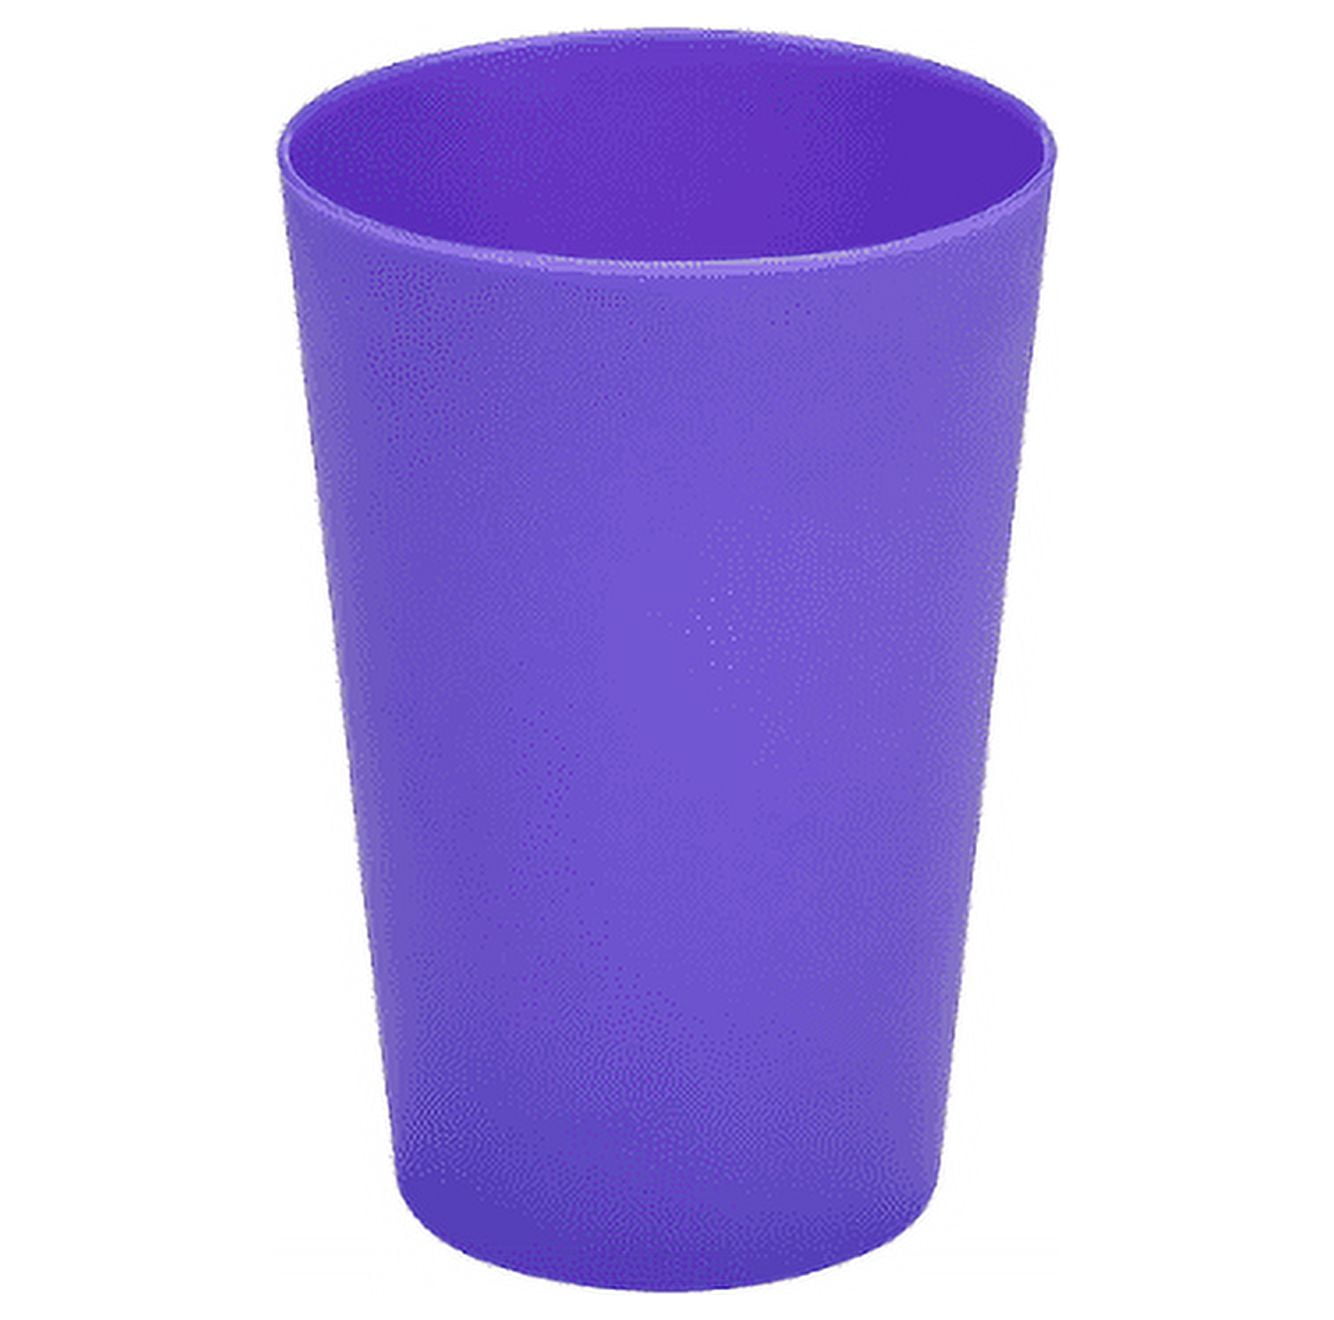 Potchen 54 Pieces Kids Cups Plastic Cups, 8.5 oz Reusable Cups Kids  Drinking Cups Stackable Plastic …See more Potchen 54 Pieces Kids Cups  Plastic